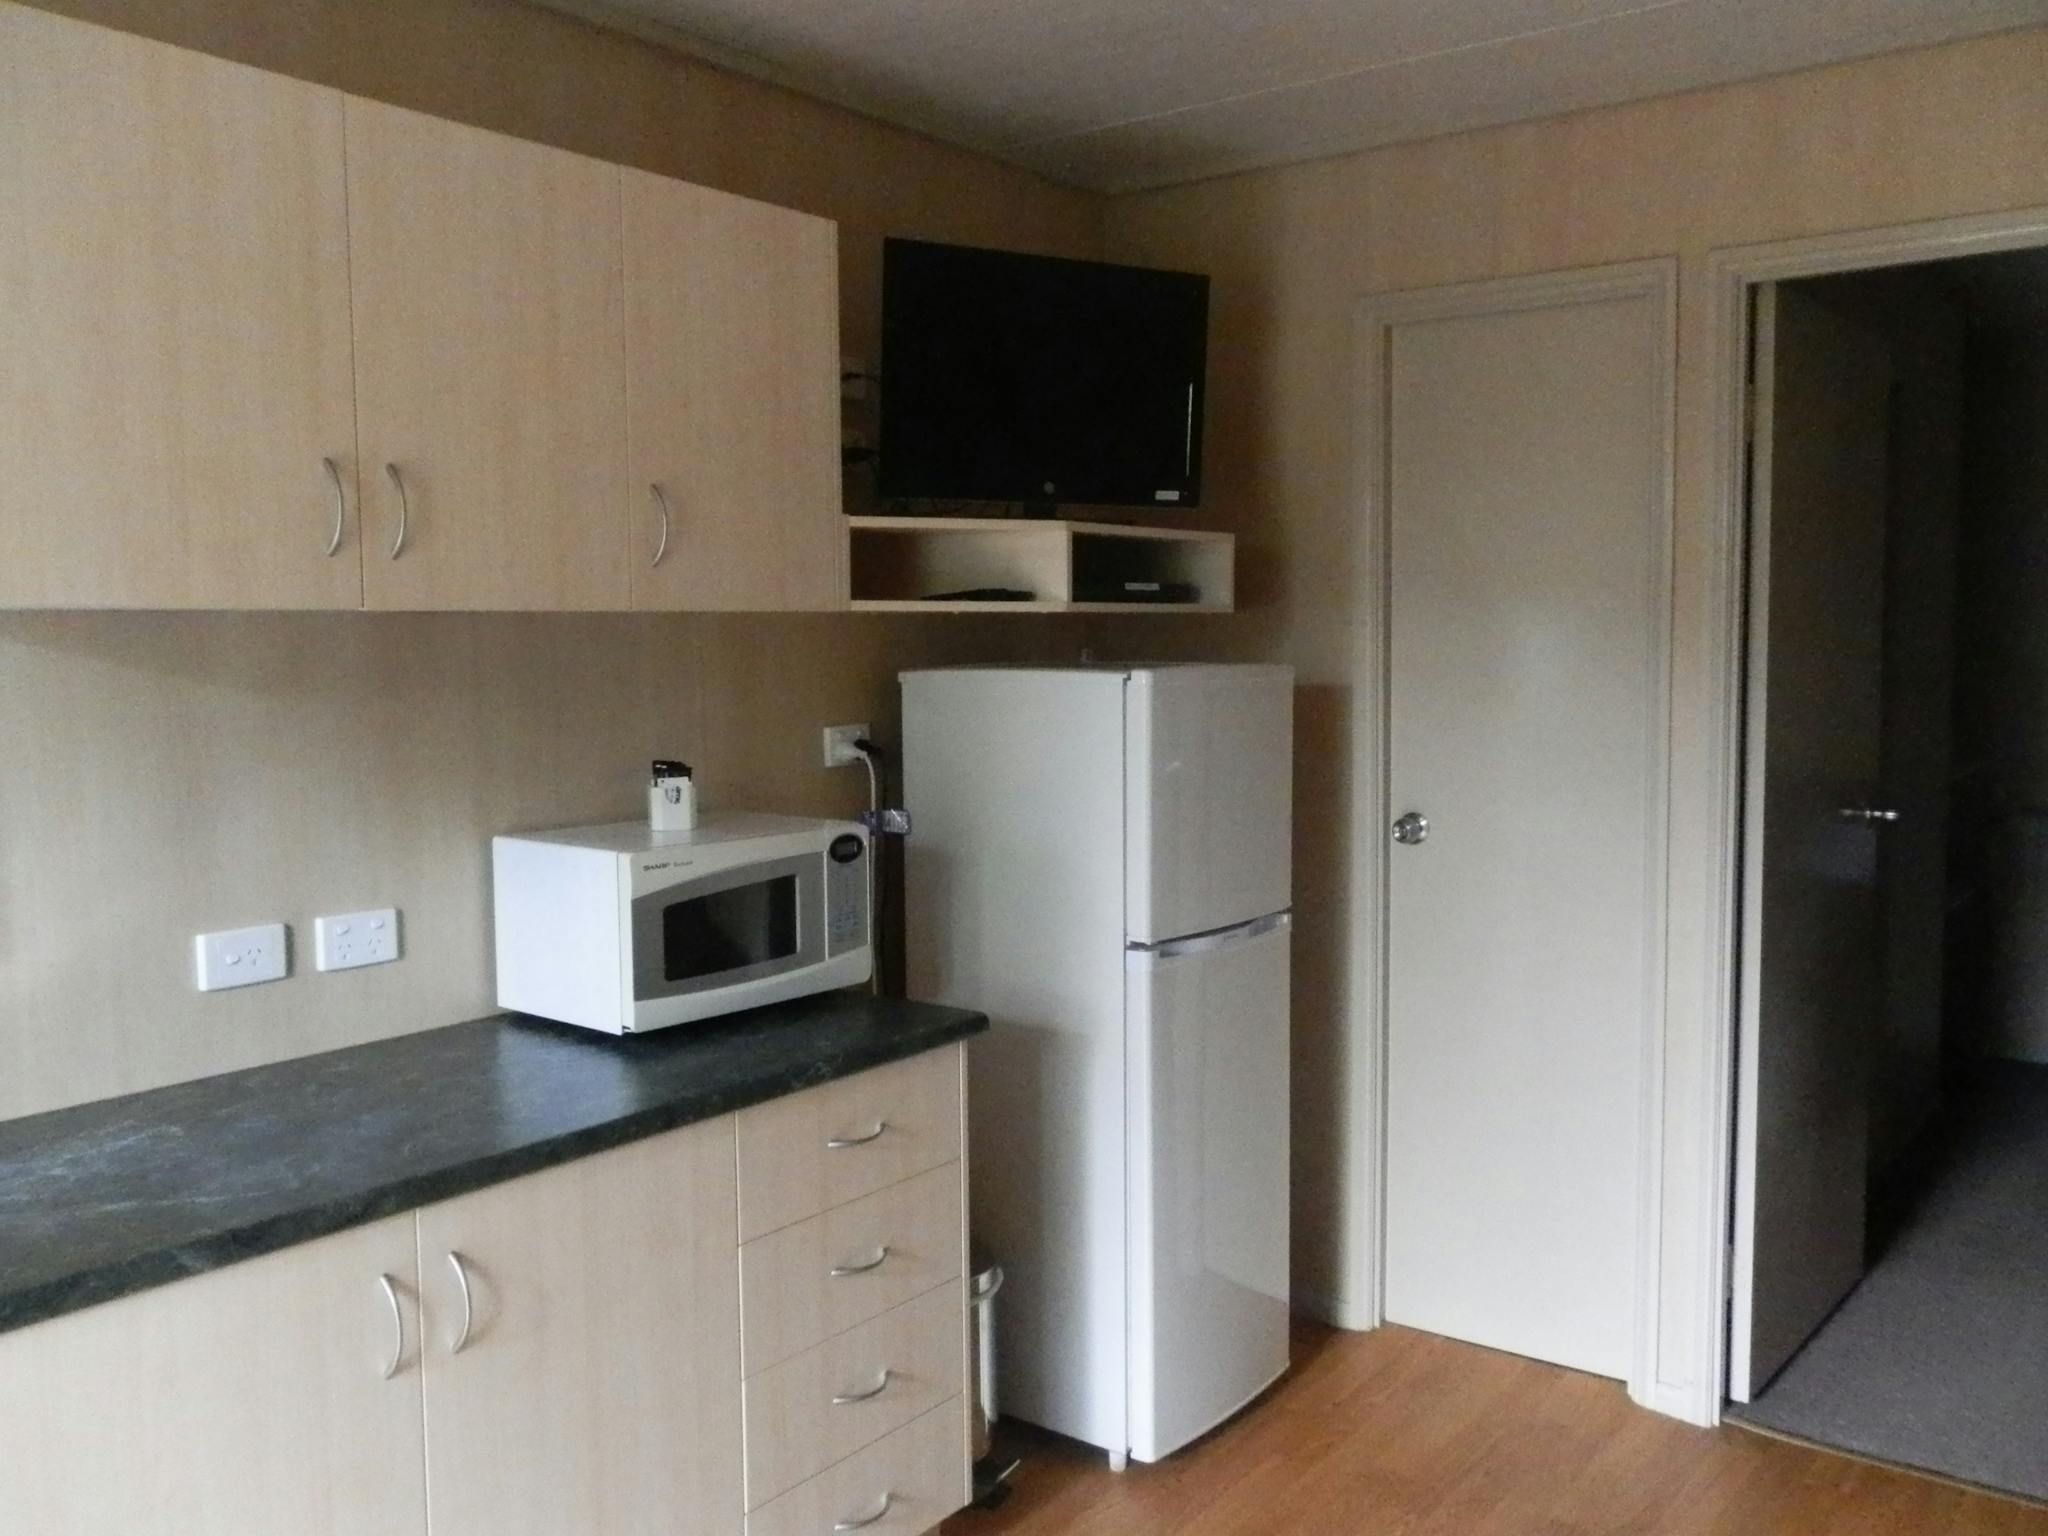 Kitchen area with domestic size fridge/freezer